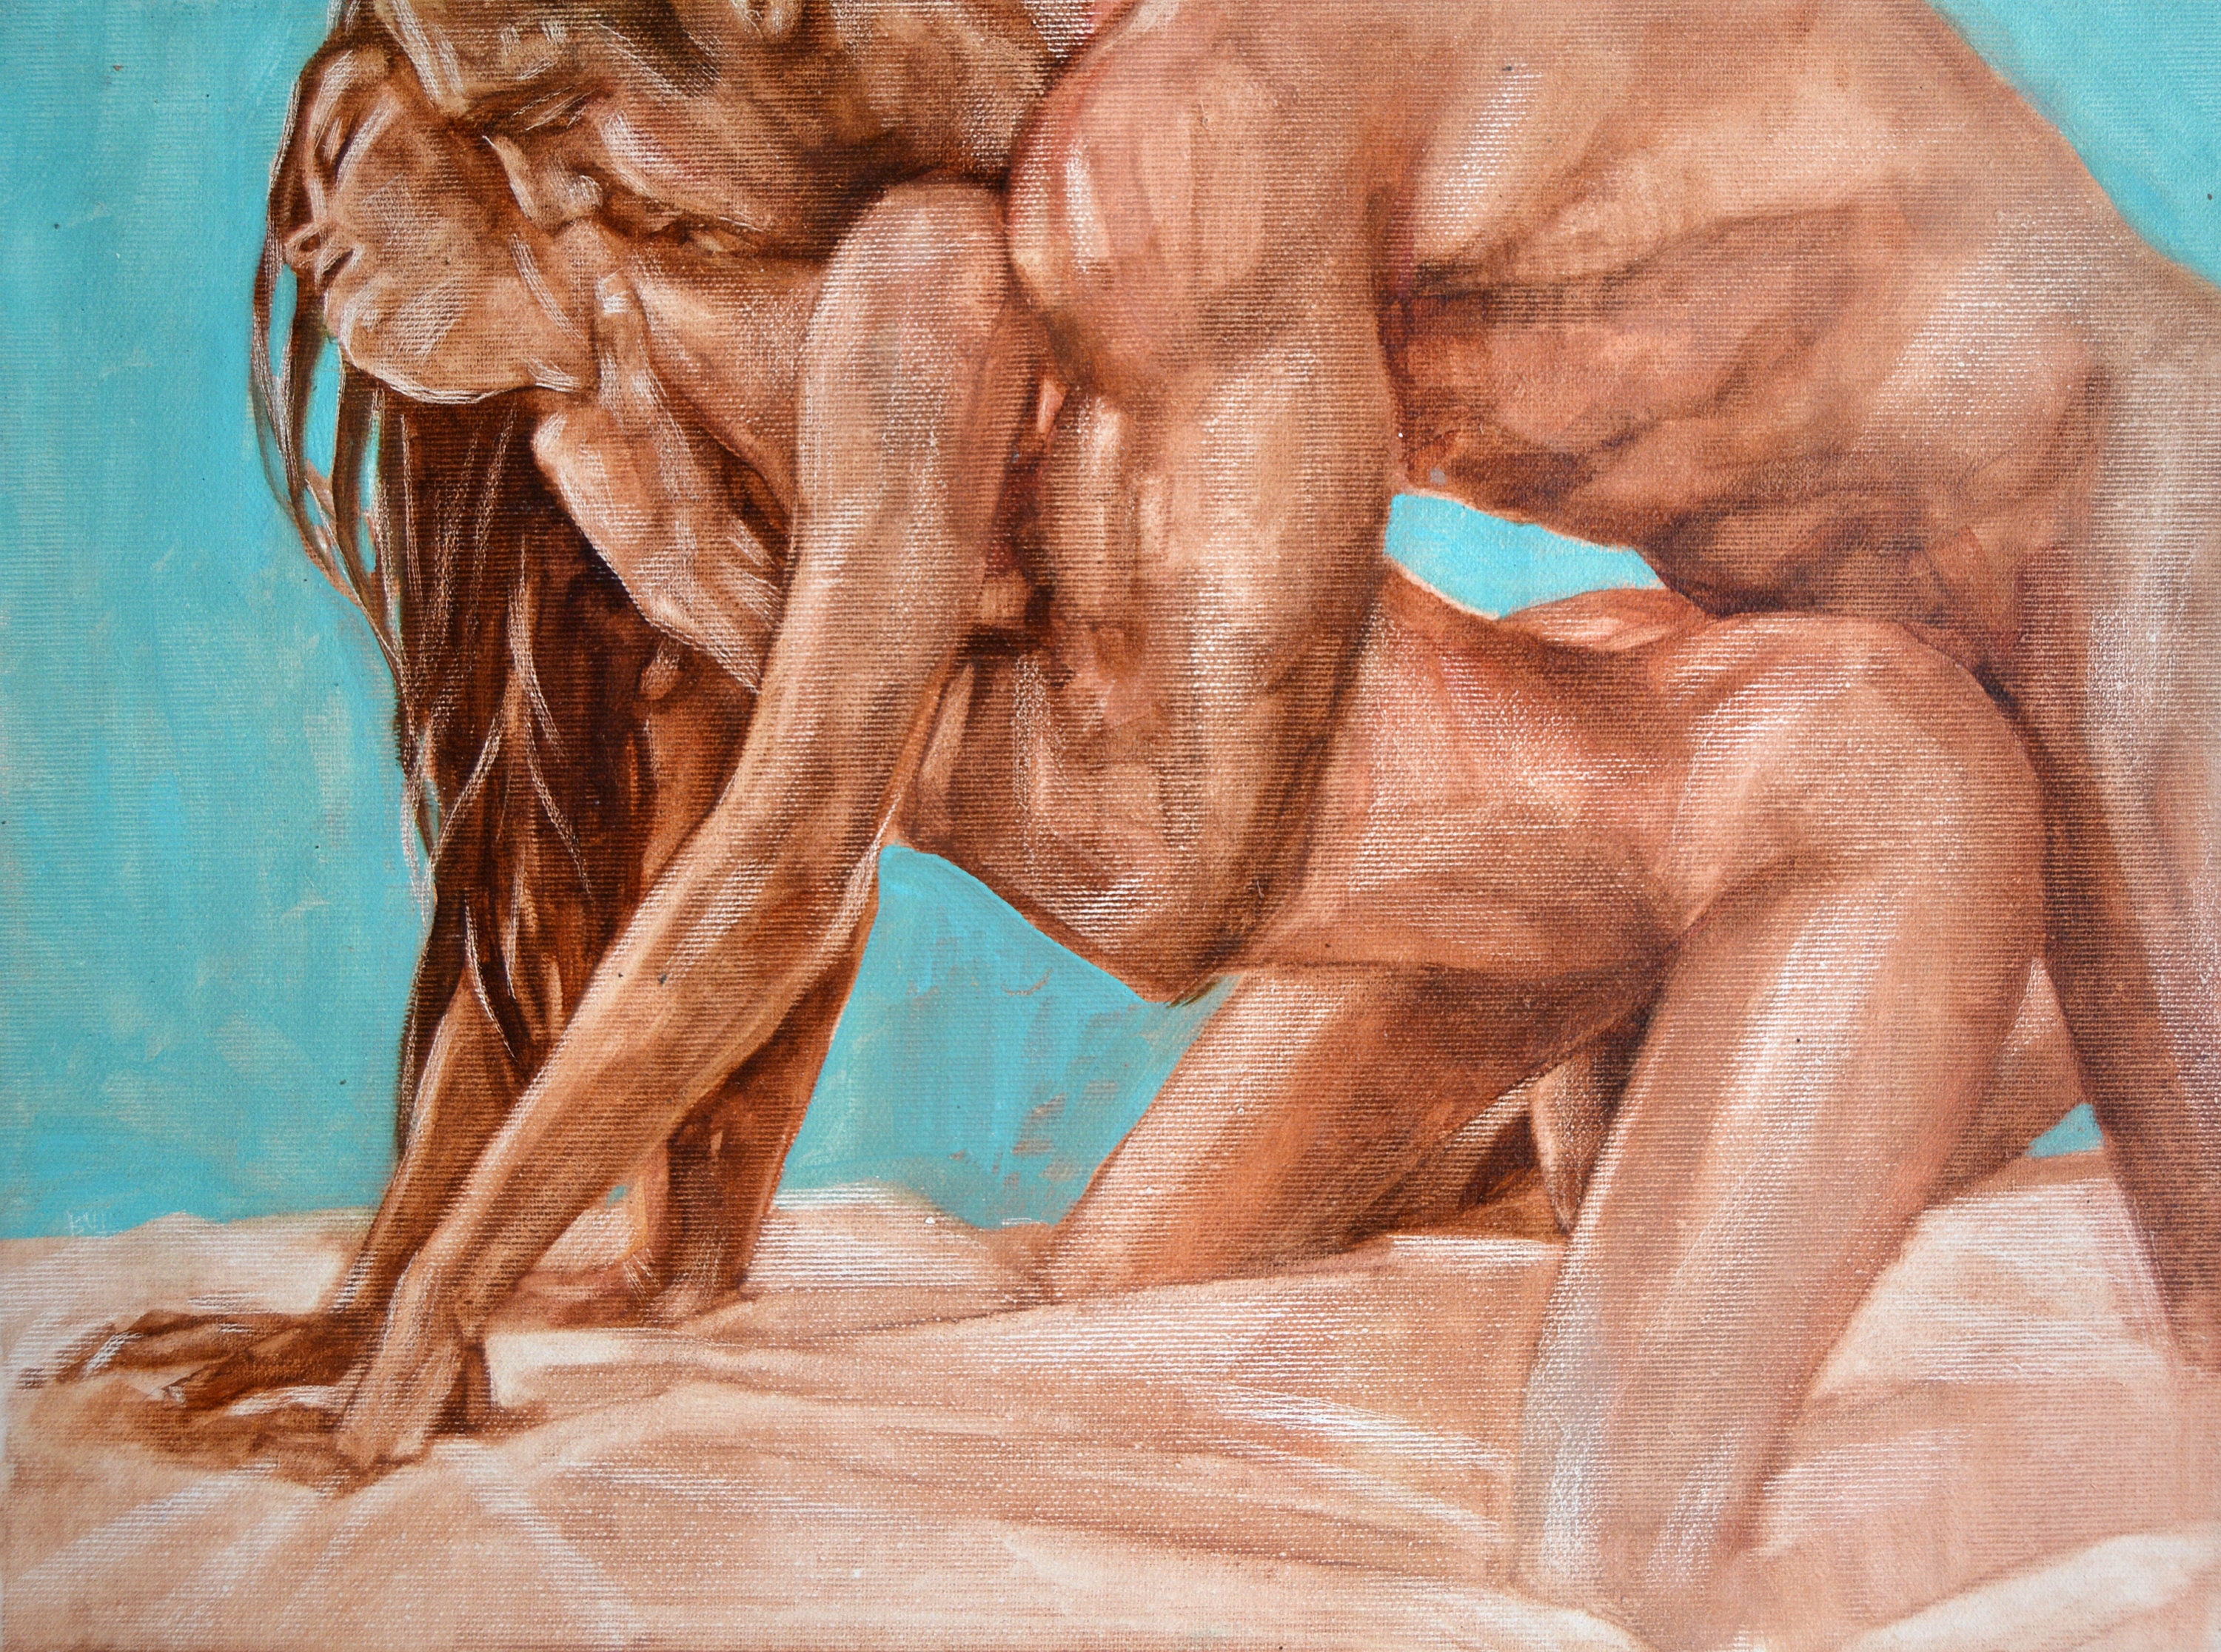 Erotic Art Original Art Sex Art Painting Nude Couple Modern